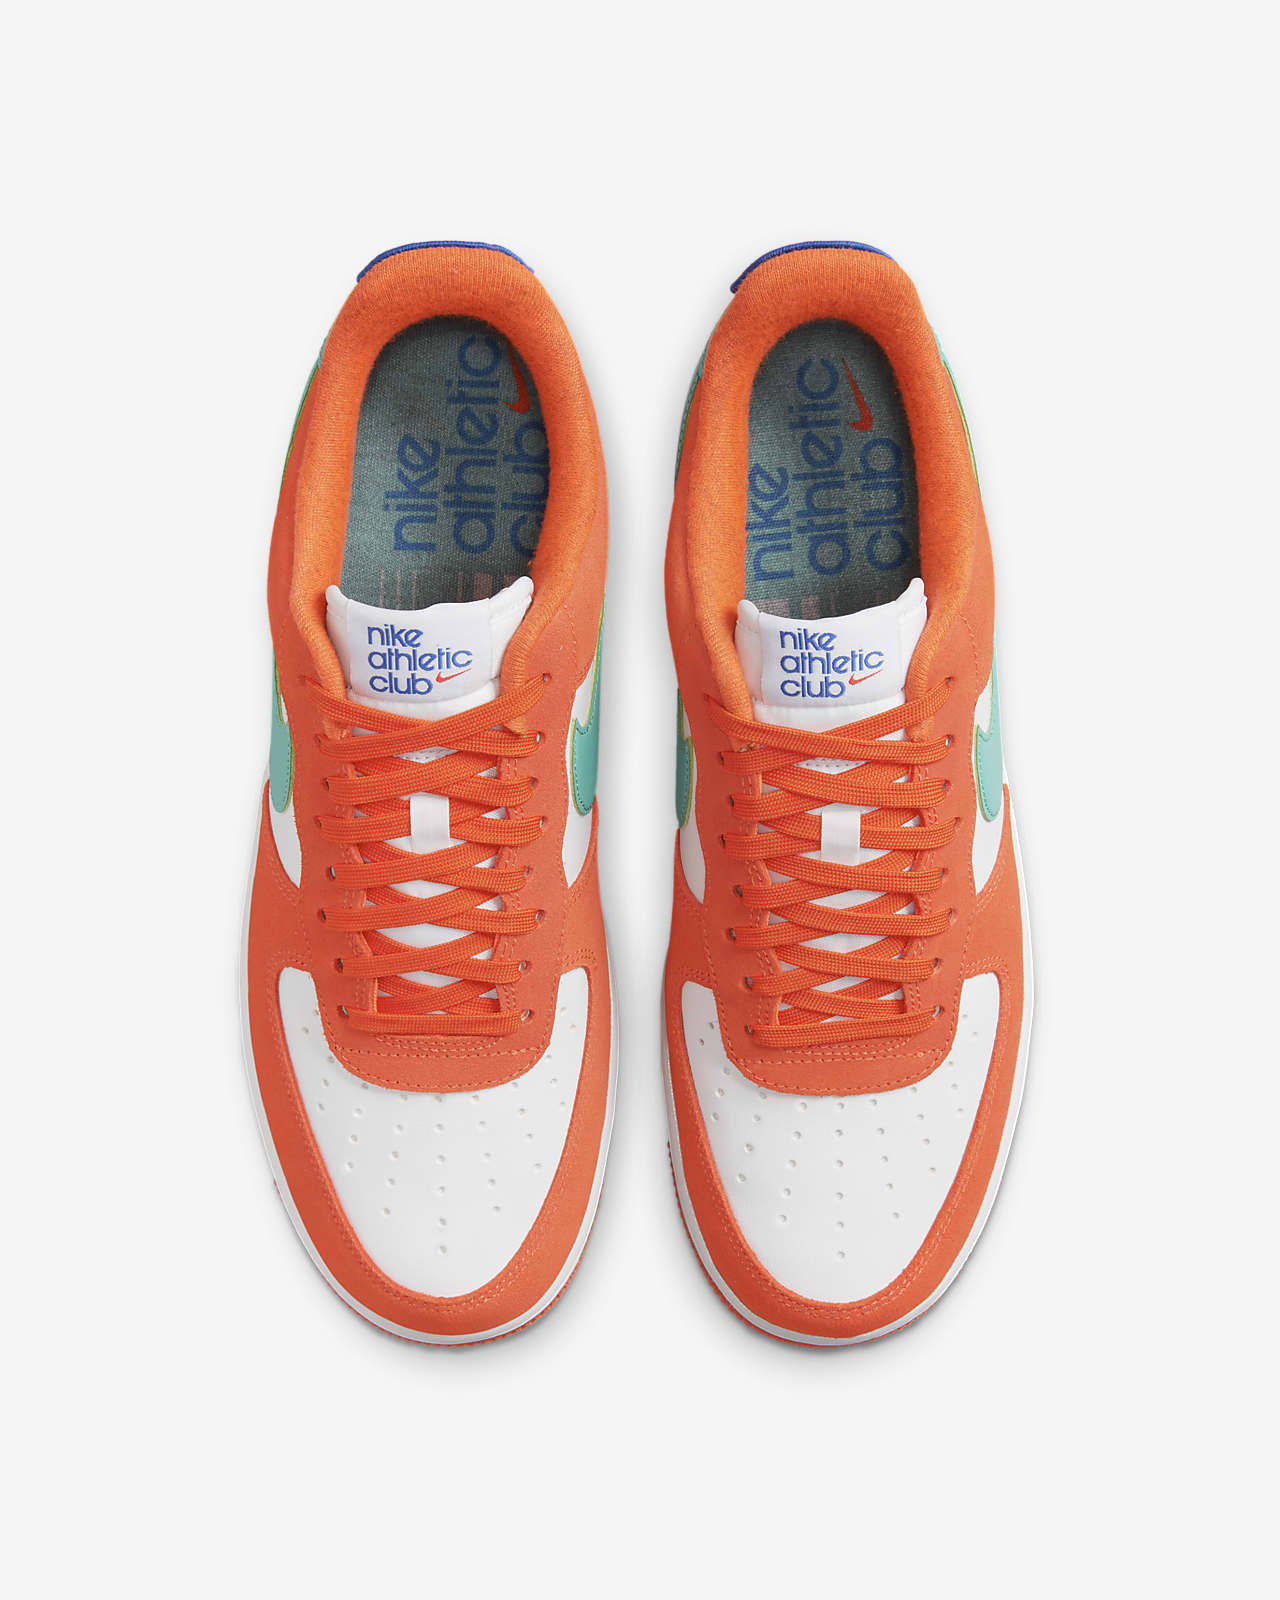 Nike Air Force orange nike tennis shoes 1 '07 LV8 Men's Shoes